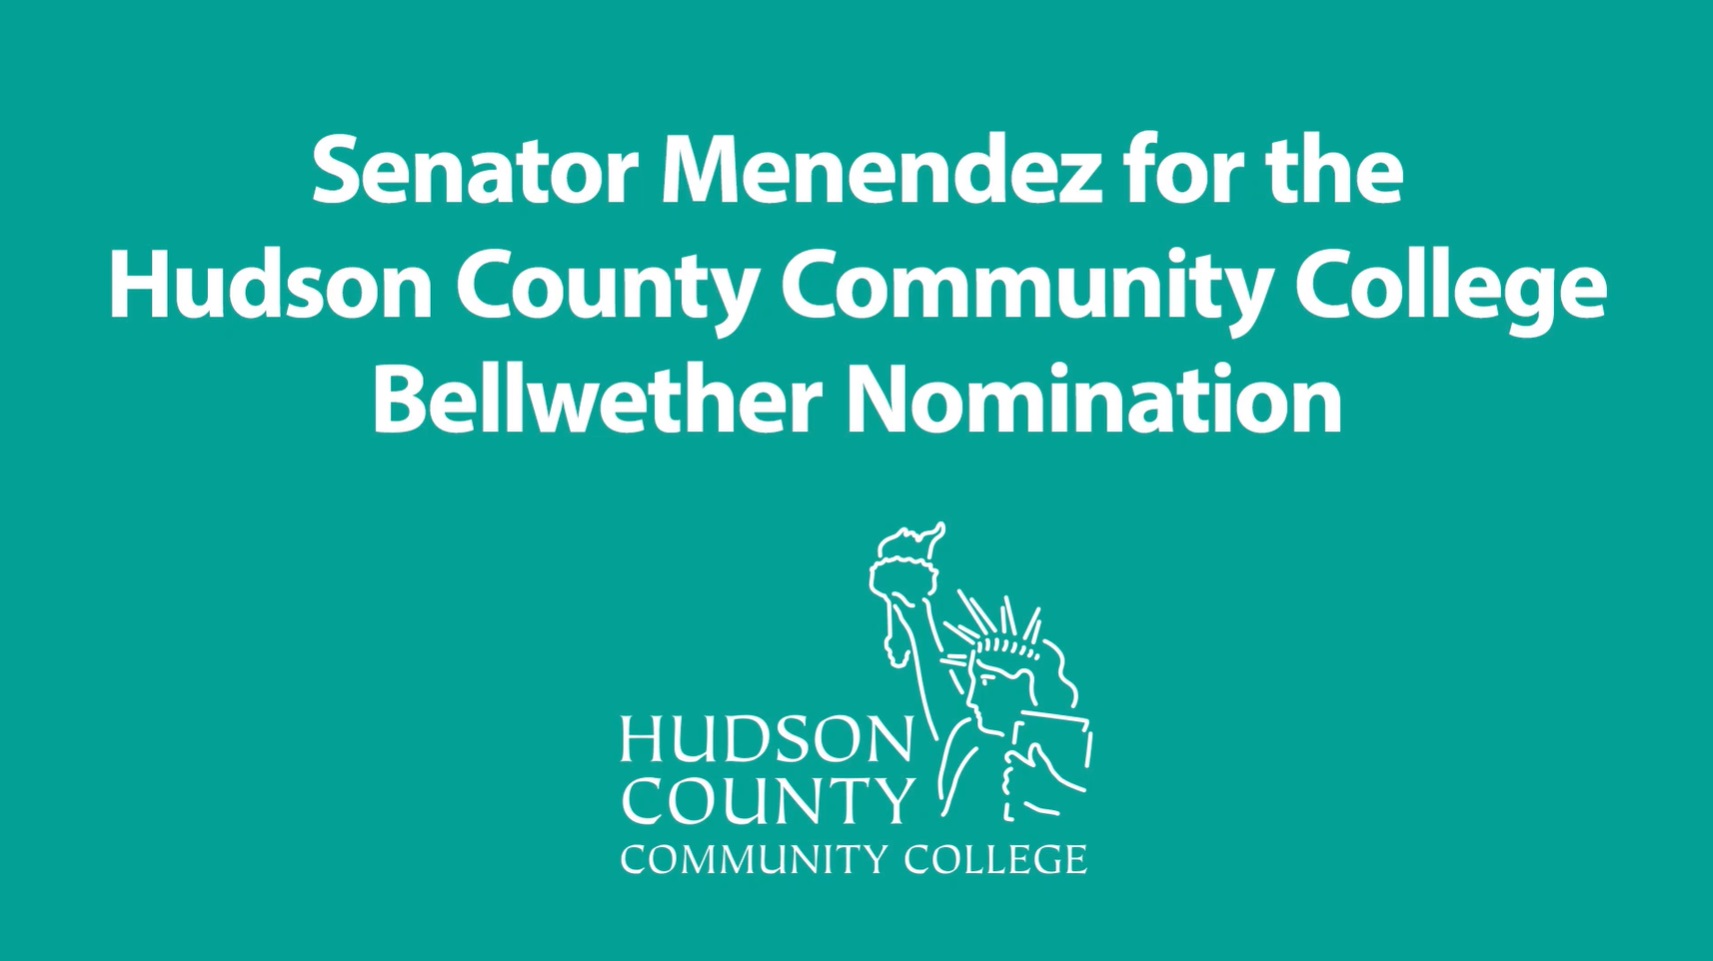 Senator Menendez for the Hudson County Community College Bellwether Nomination